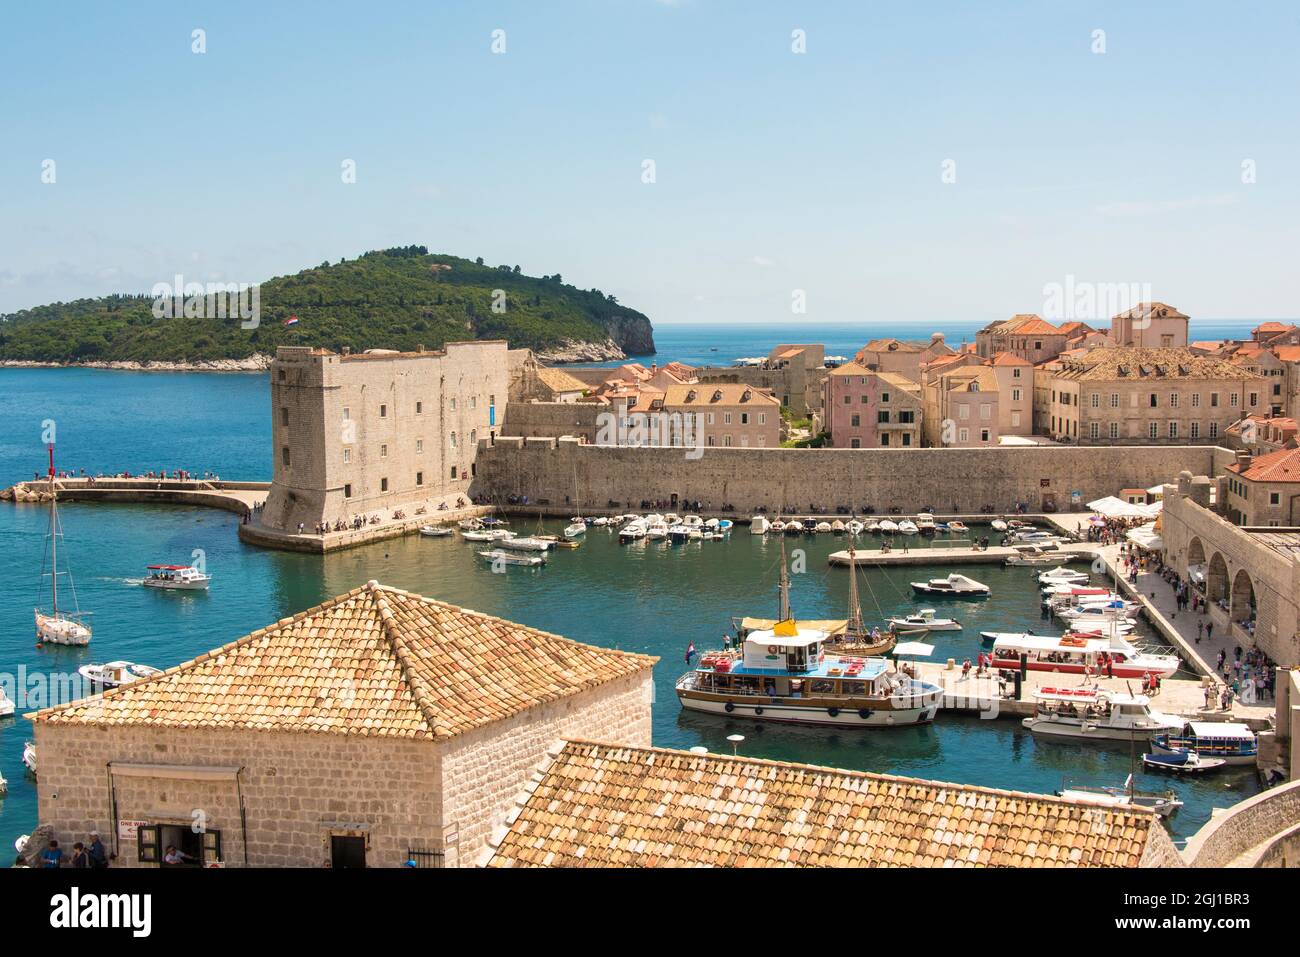 Croatia, Dubrovnik. Walled city old town and marina. St. John Fortress (Sveti Ivan) called Mulo Tower. Lokrum island offshore. Stock Photo